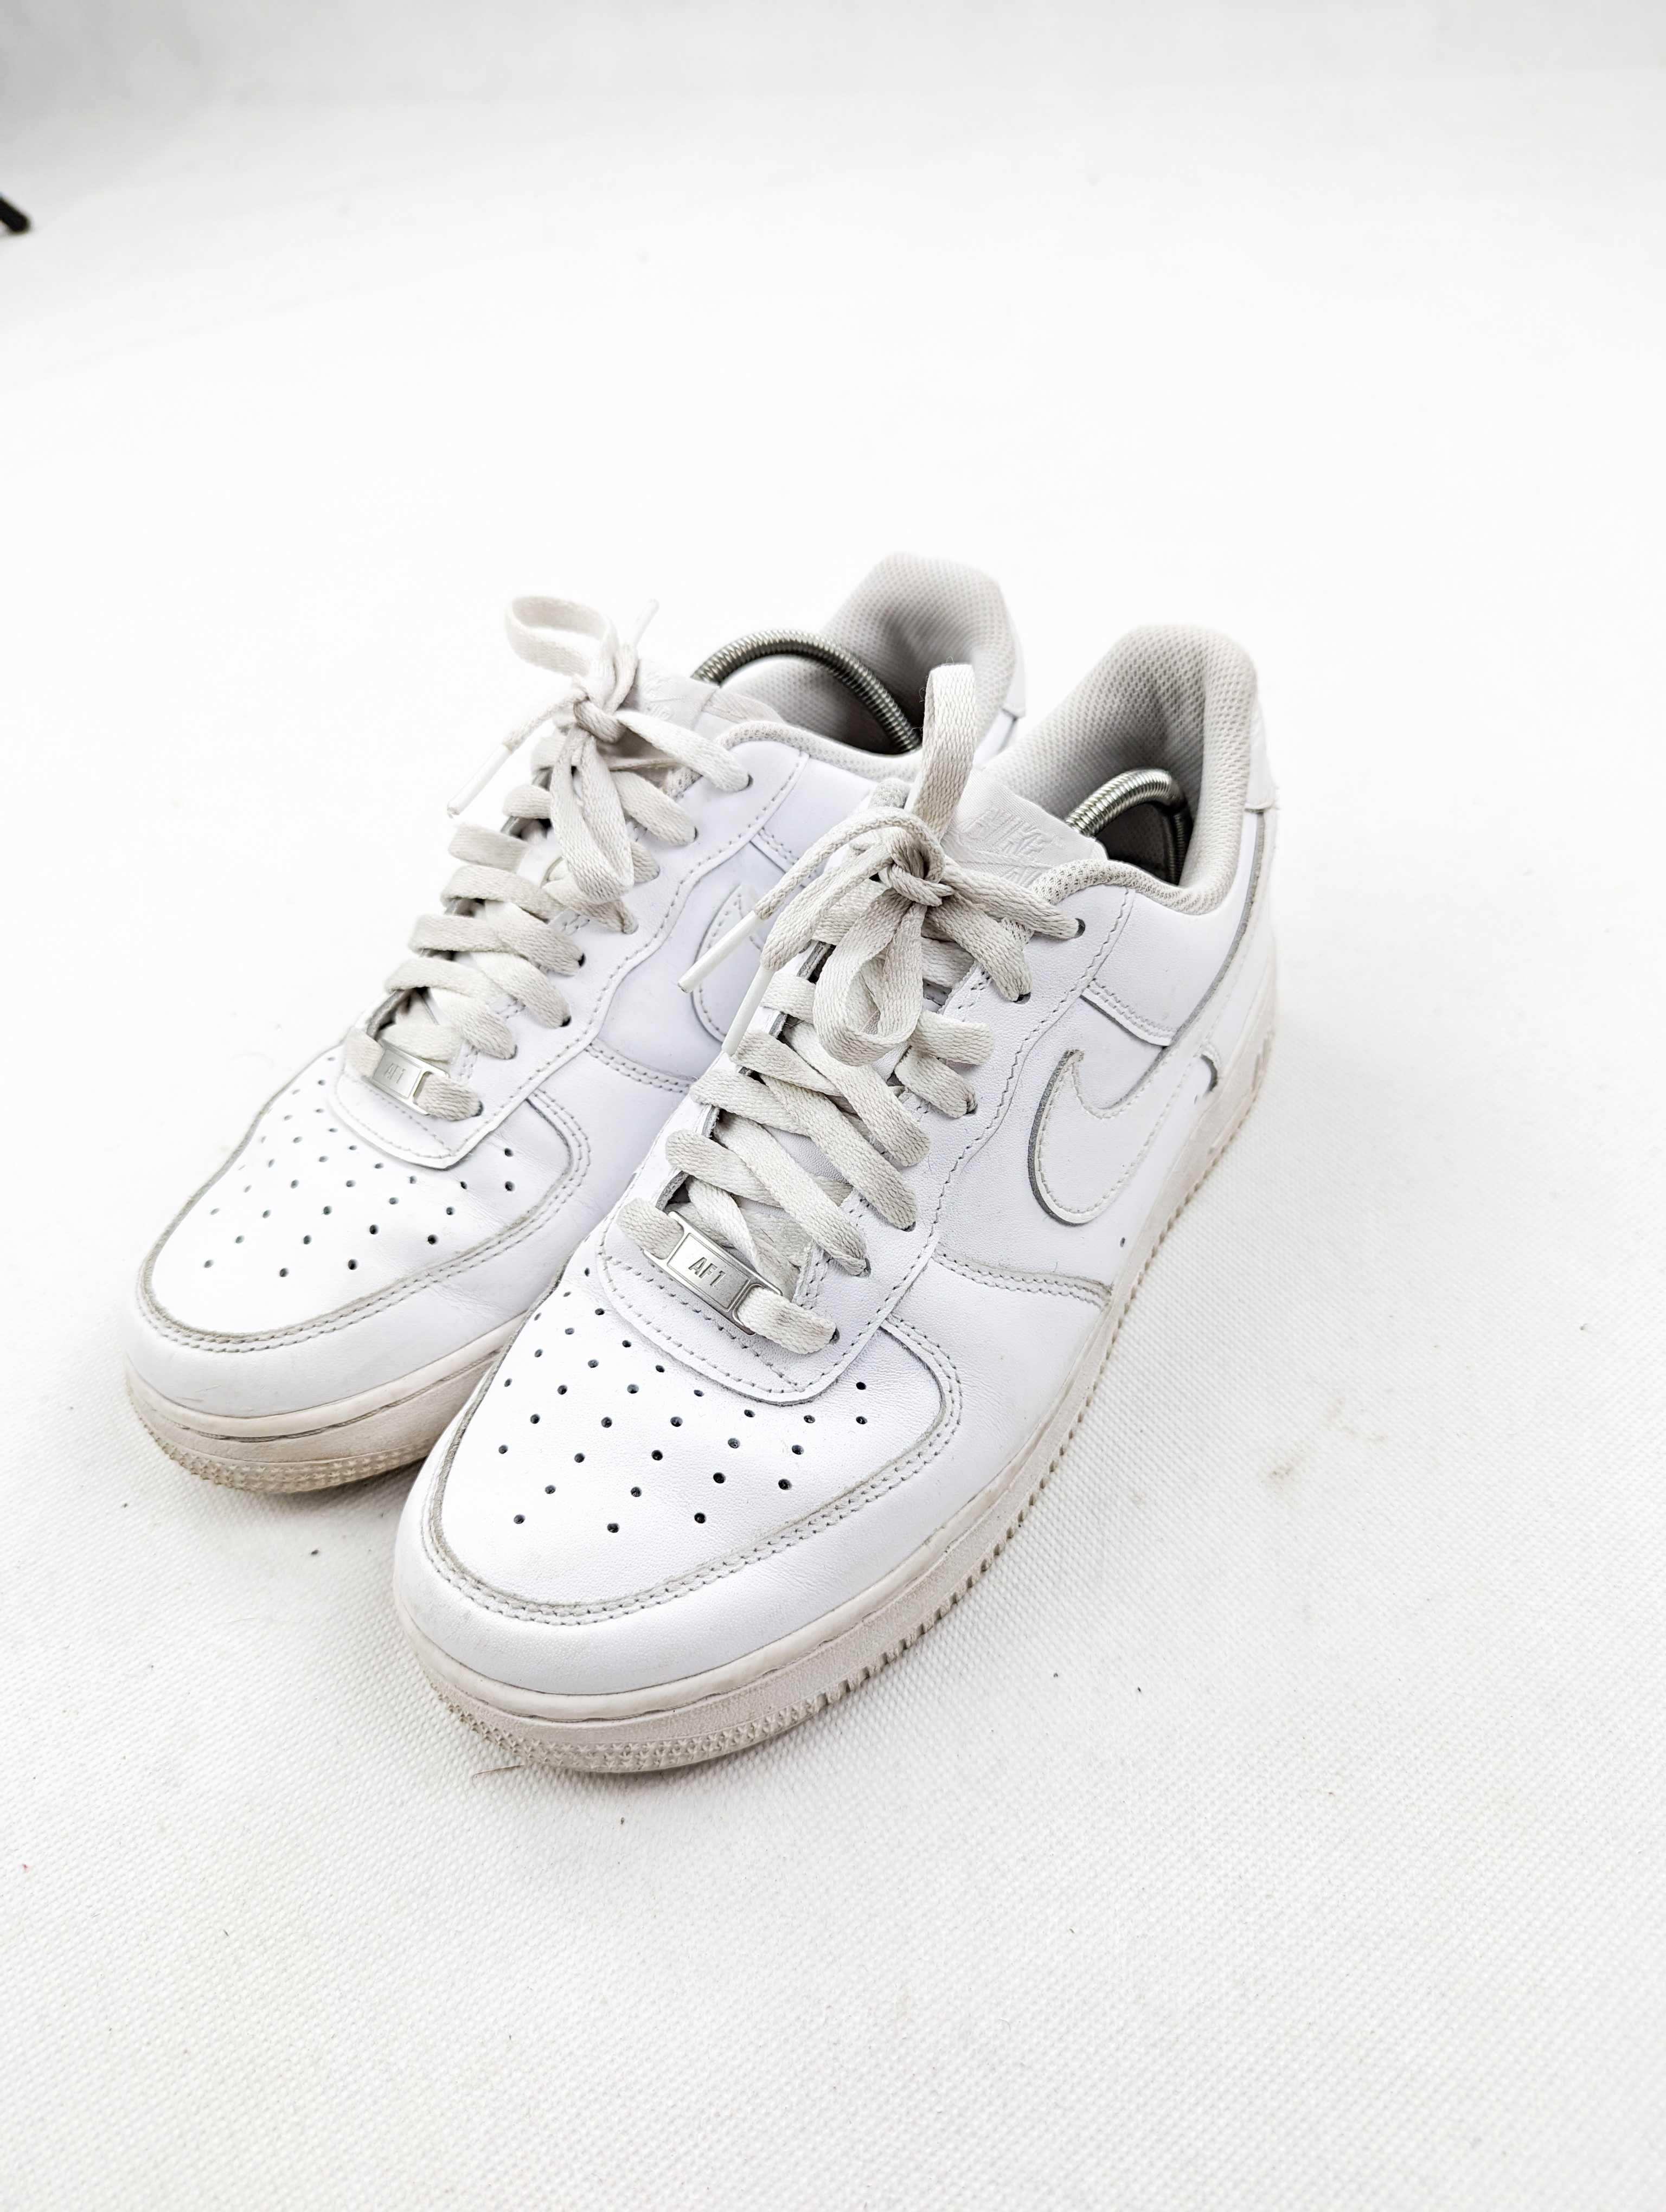 Nike Air Force 1 białe buty rozmiar 42,5